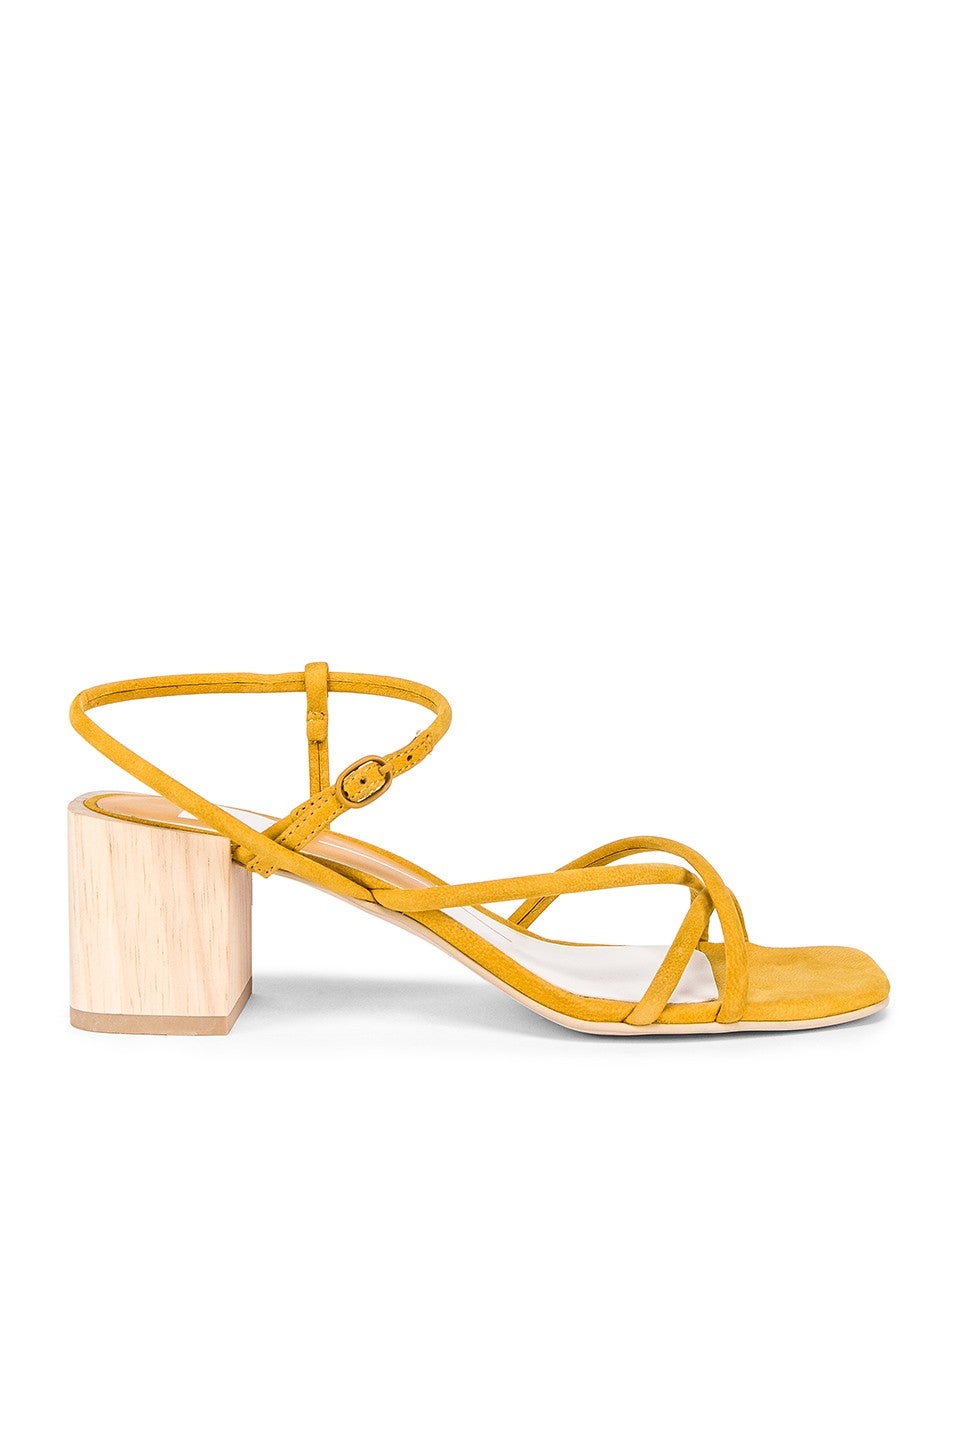 Dolce Vita strappy yellow wooden heel sandal